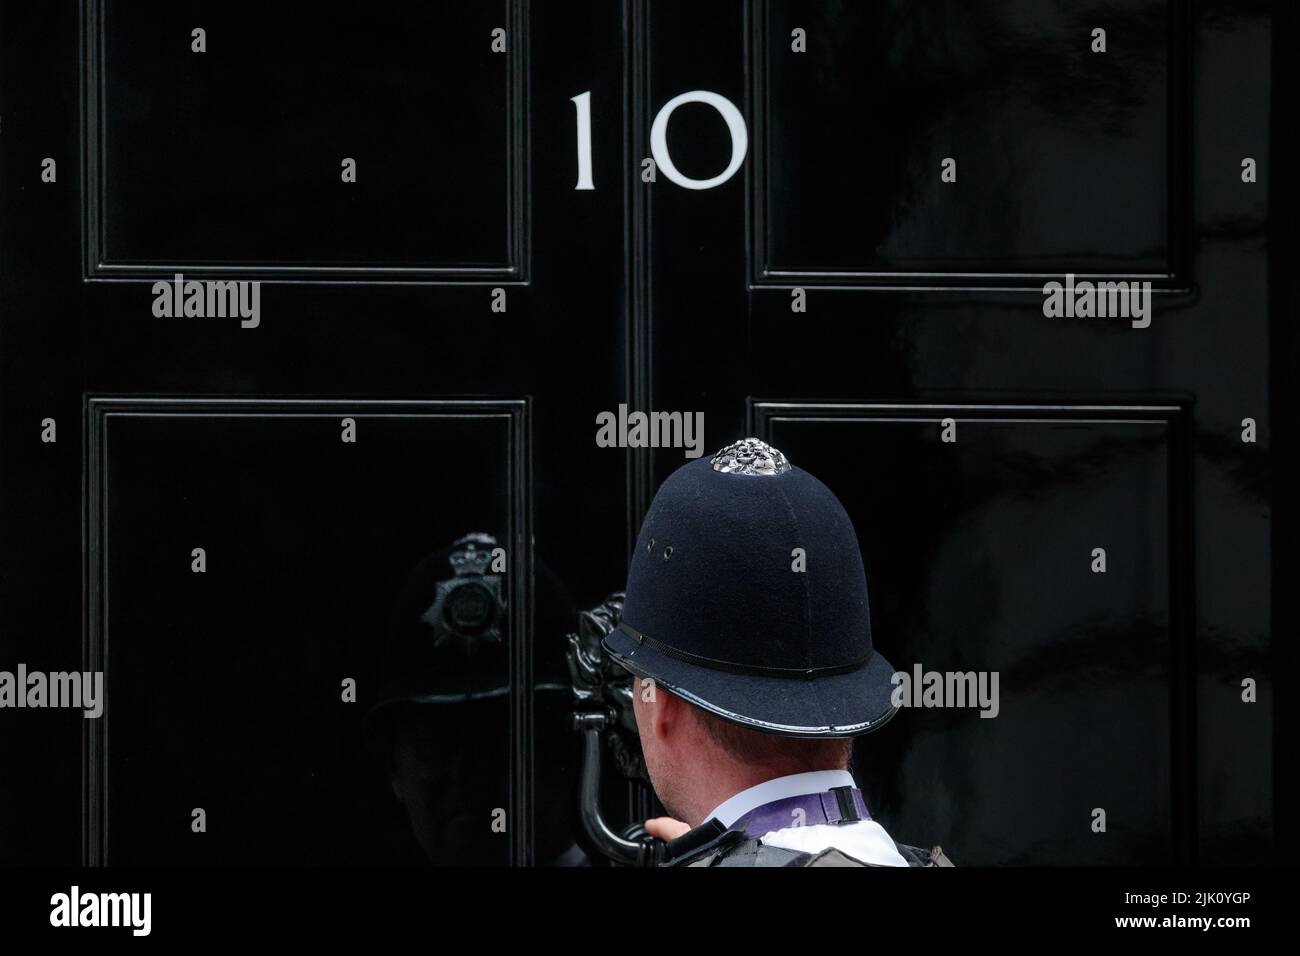 Police Officer outside Number 10 Downing Street, London, UK.Amanda Rose/Alamy Live News Stock Photo